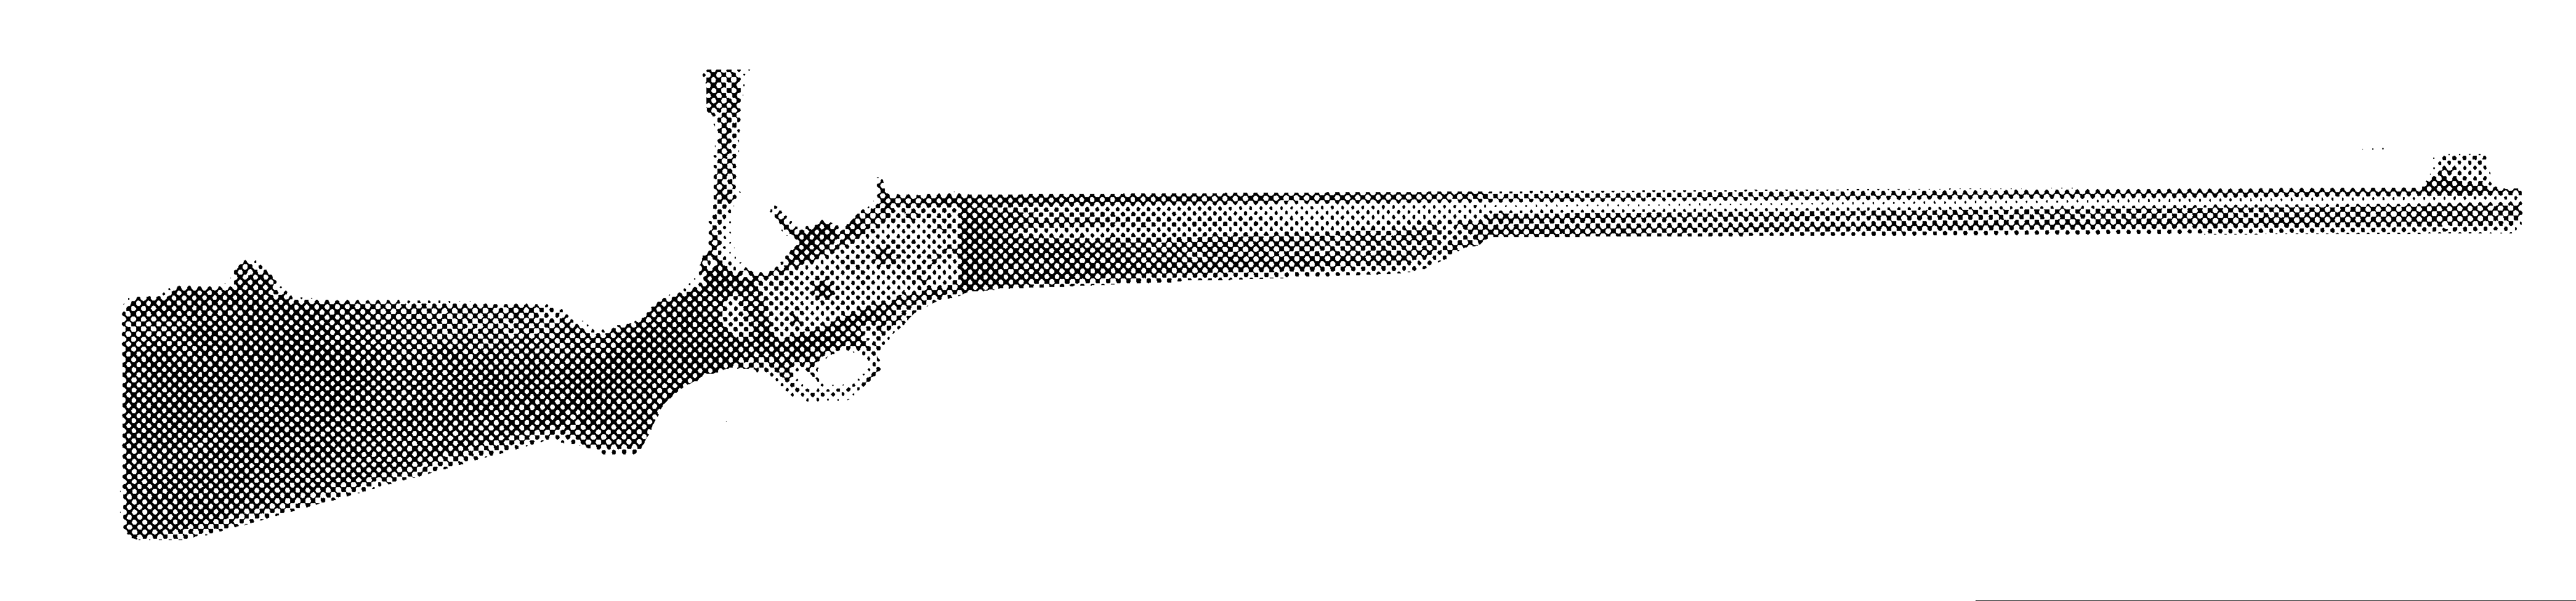 Long-Range Creedmoor Rifle